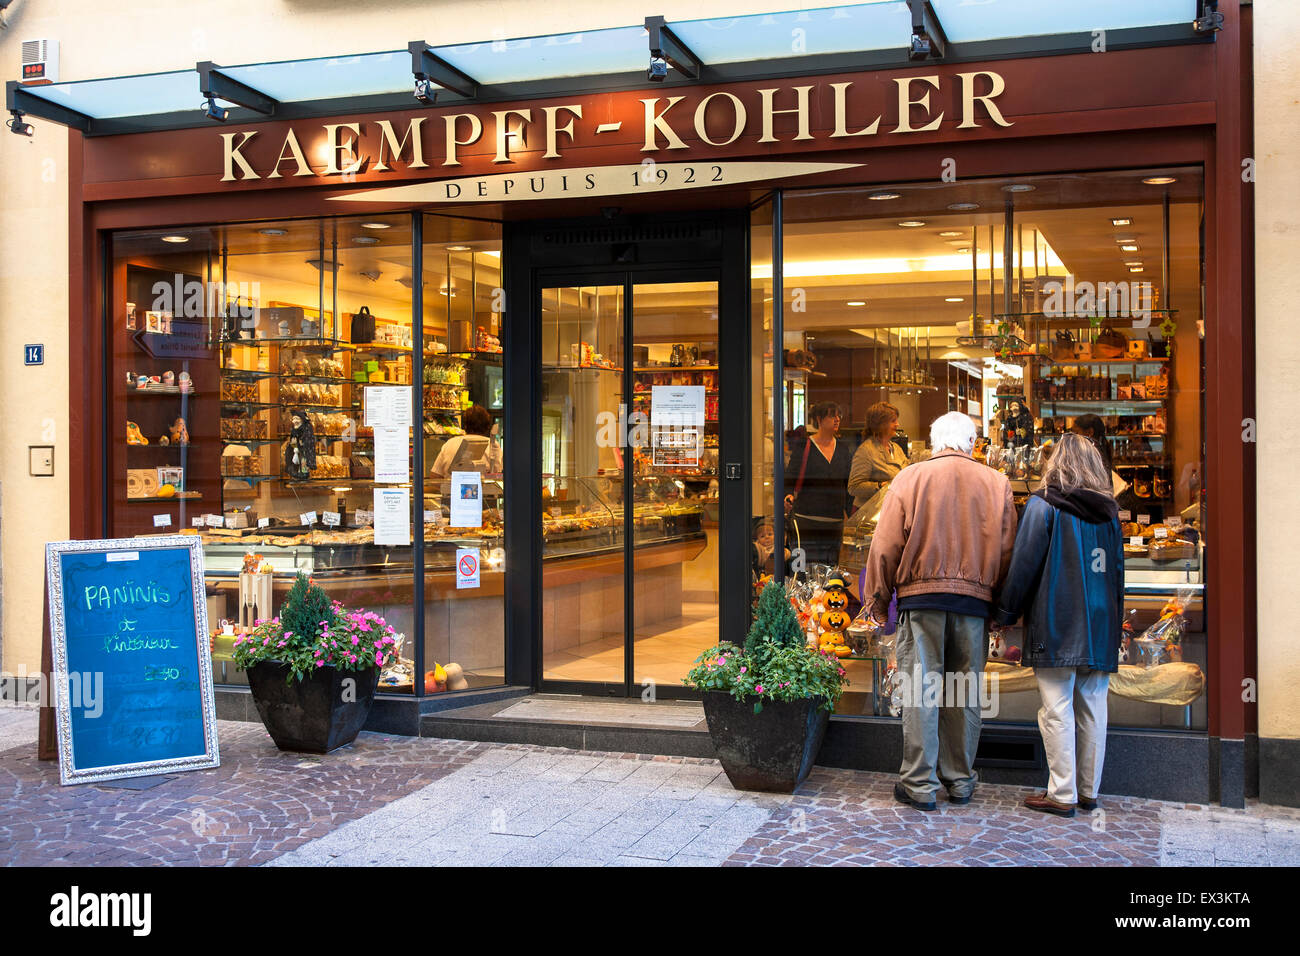 LUX, Lussemburgo, città del Lussemburgo, delicatessen store Kaempff-Kohler al Grand-Rue. LUX, Lussemburgo, Stadt Luxemburg, Feink Foto Stock